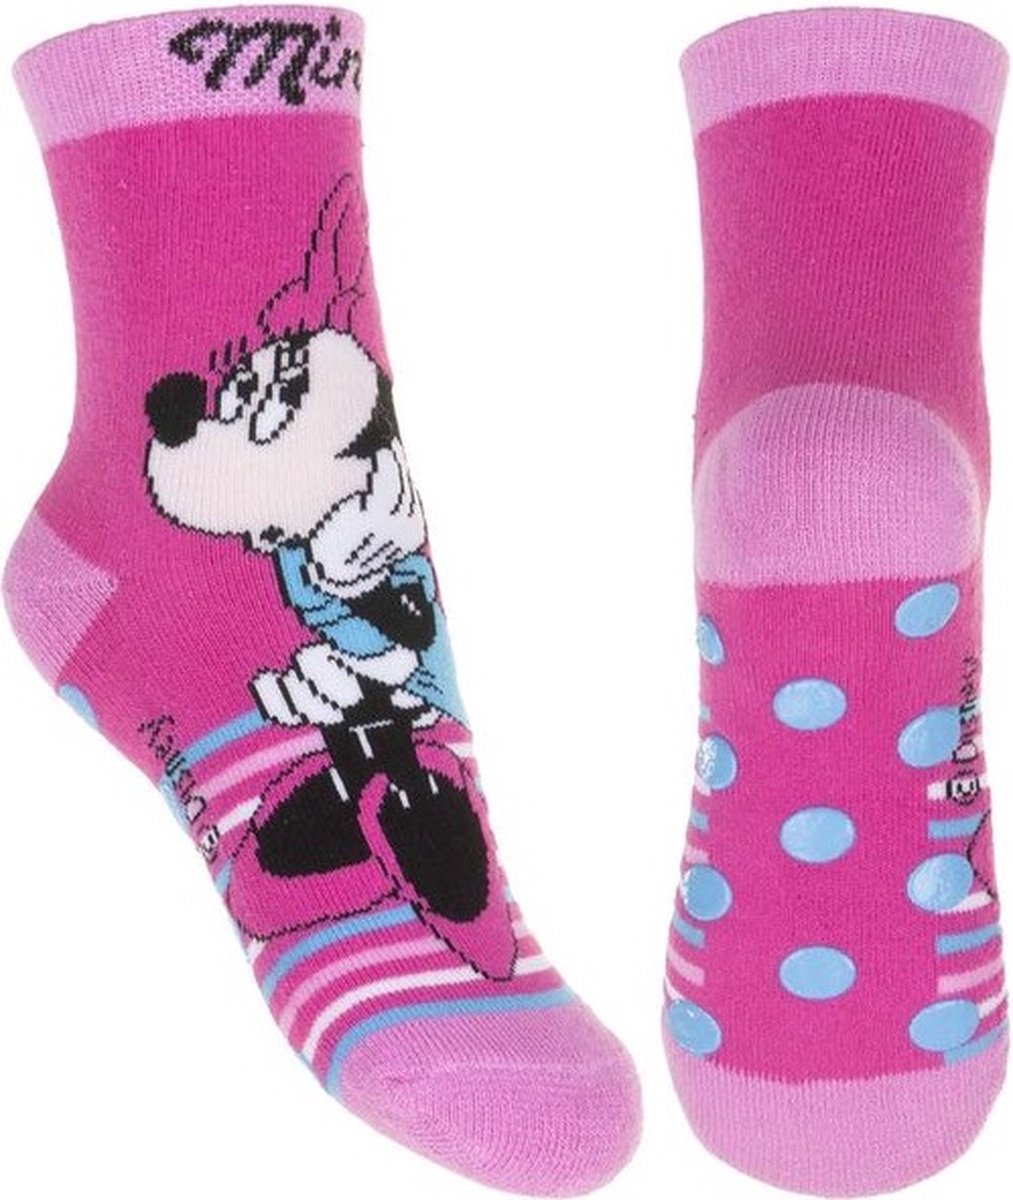 Minnie Mouse - Anti slip Badstof sokken - roze - maat 31-34